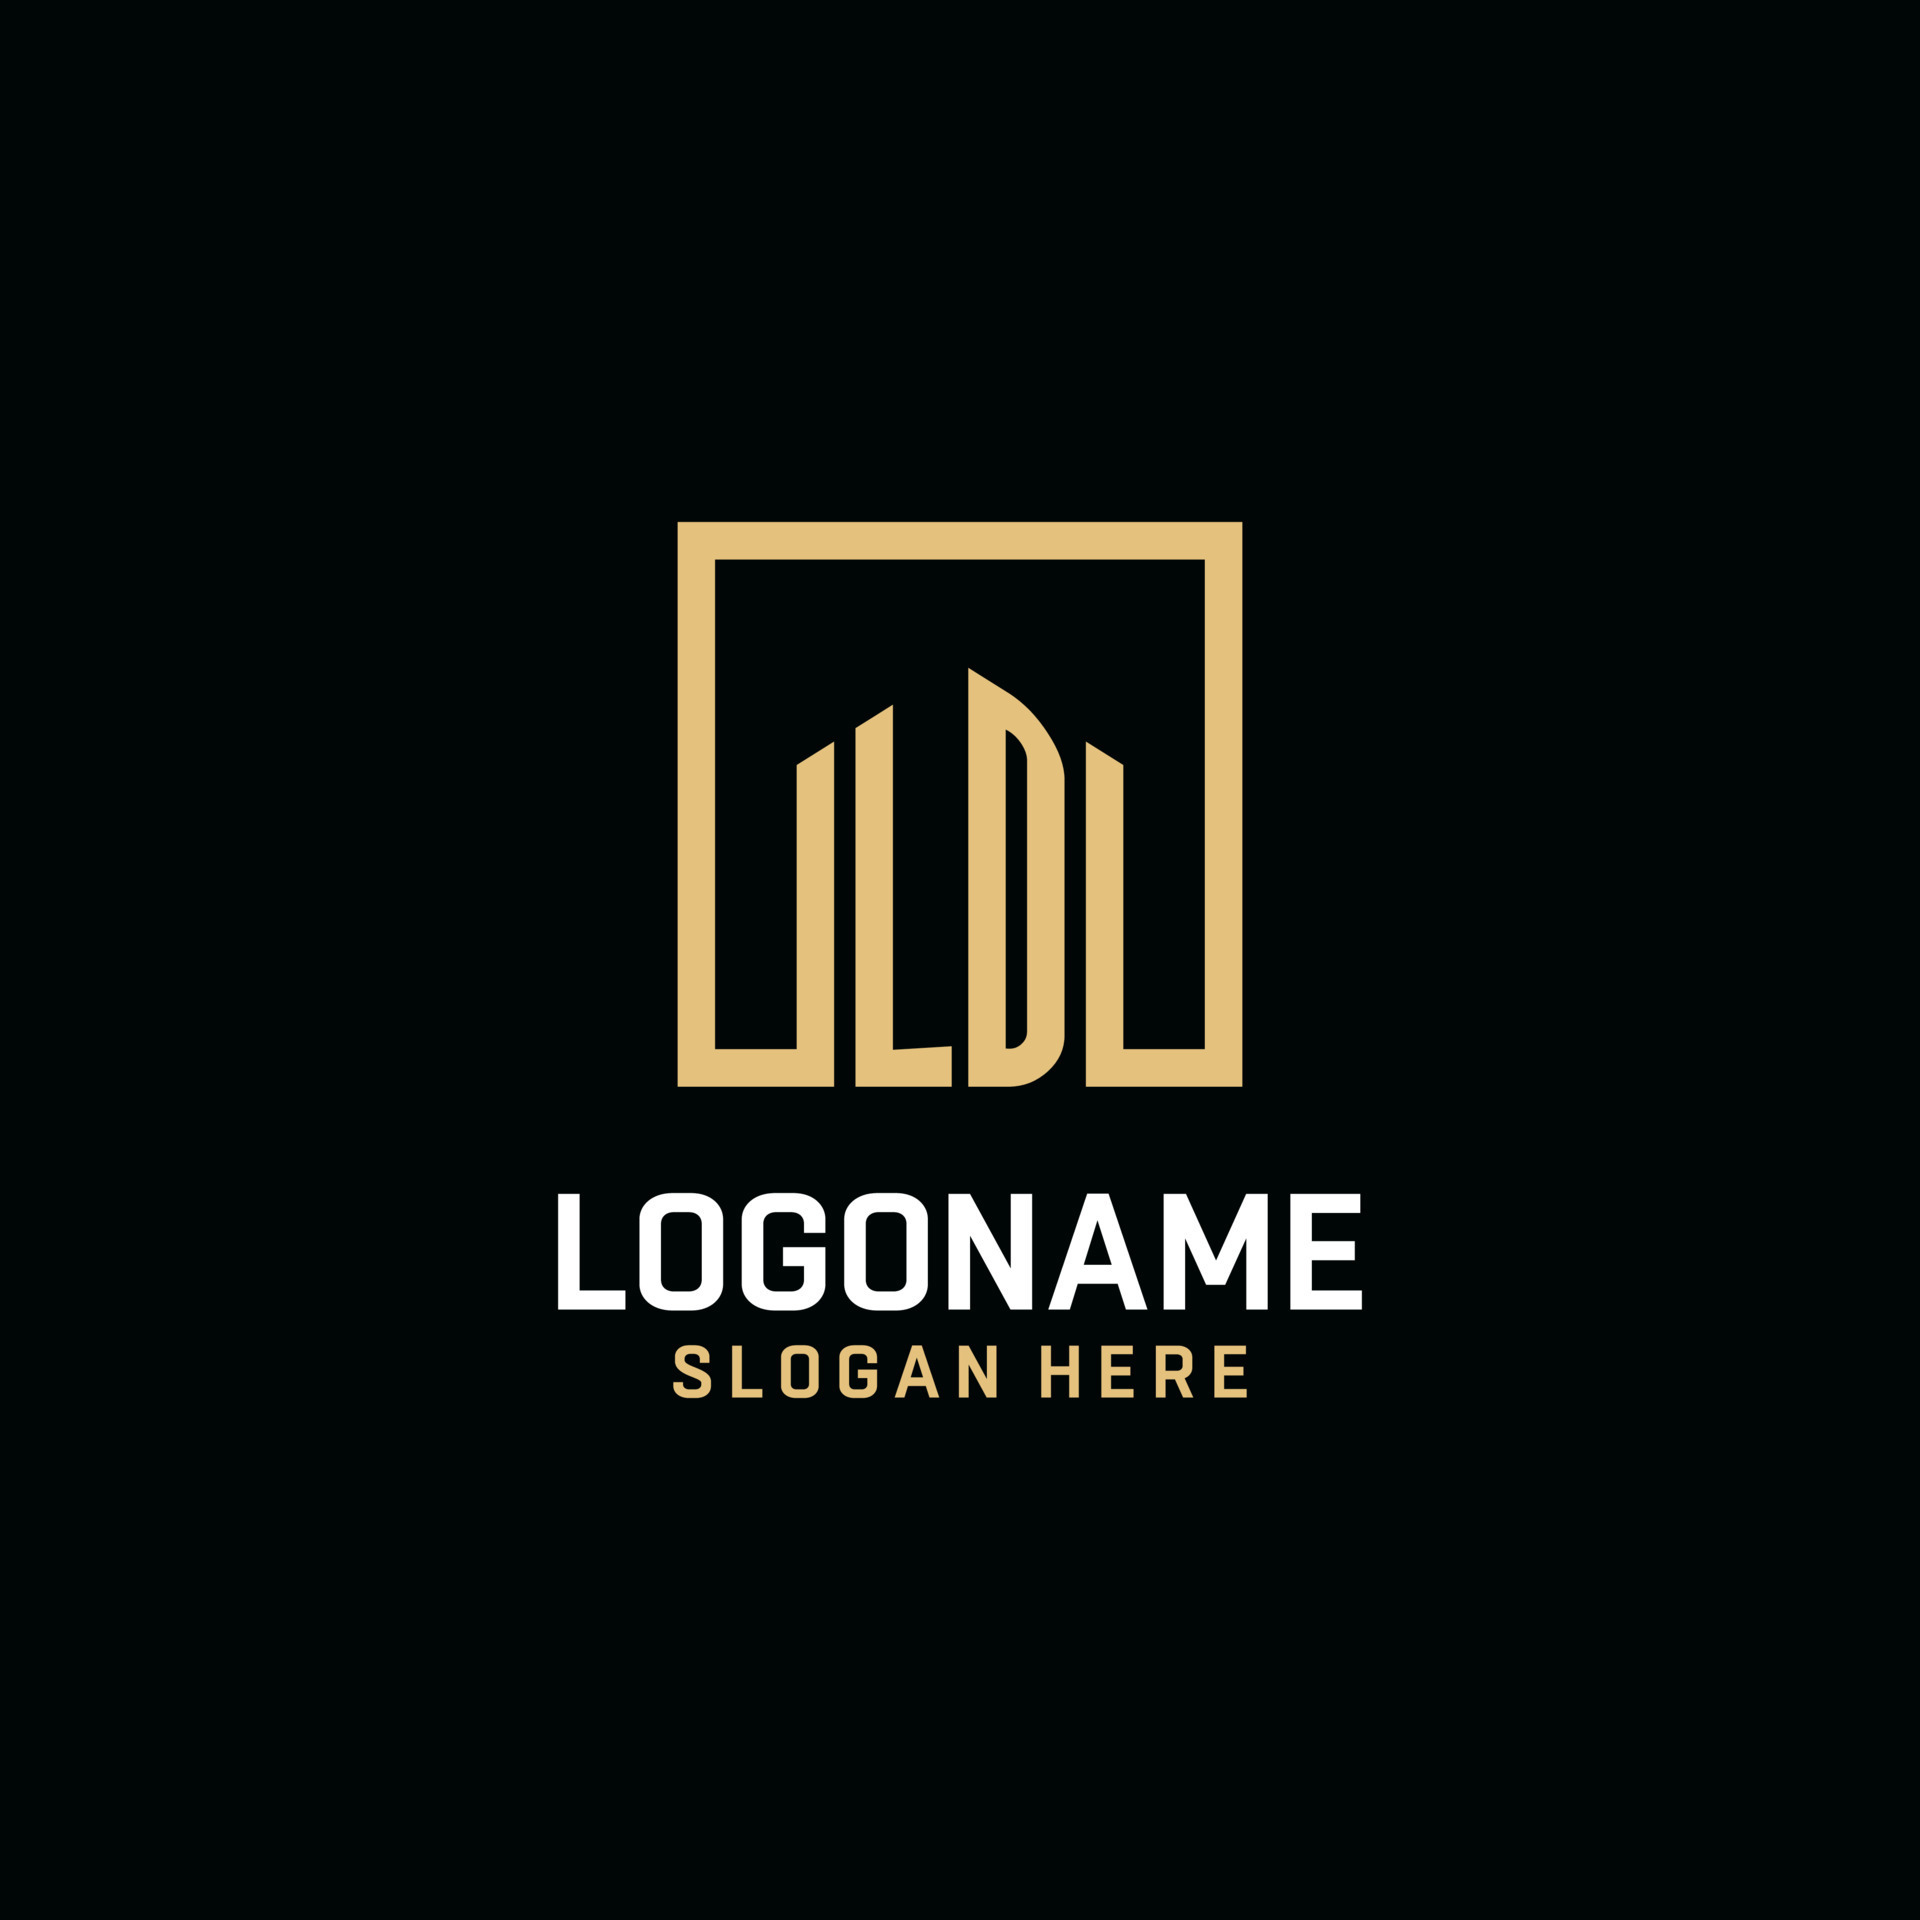 LD initial monogram logo design with square shape design ideas 12780383 ...